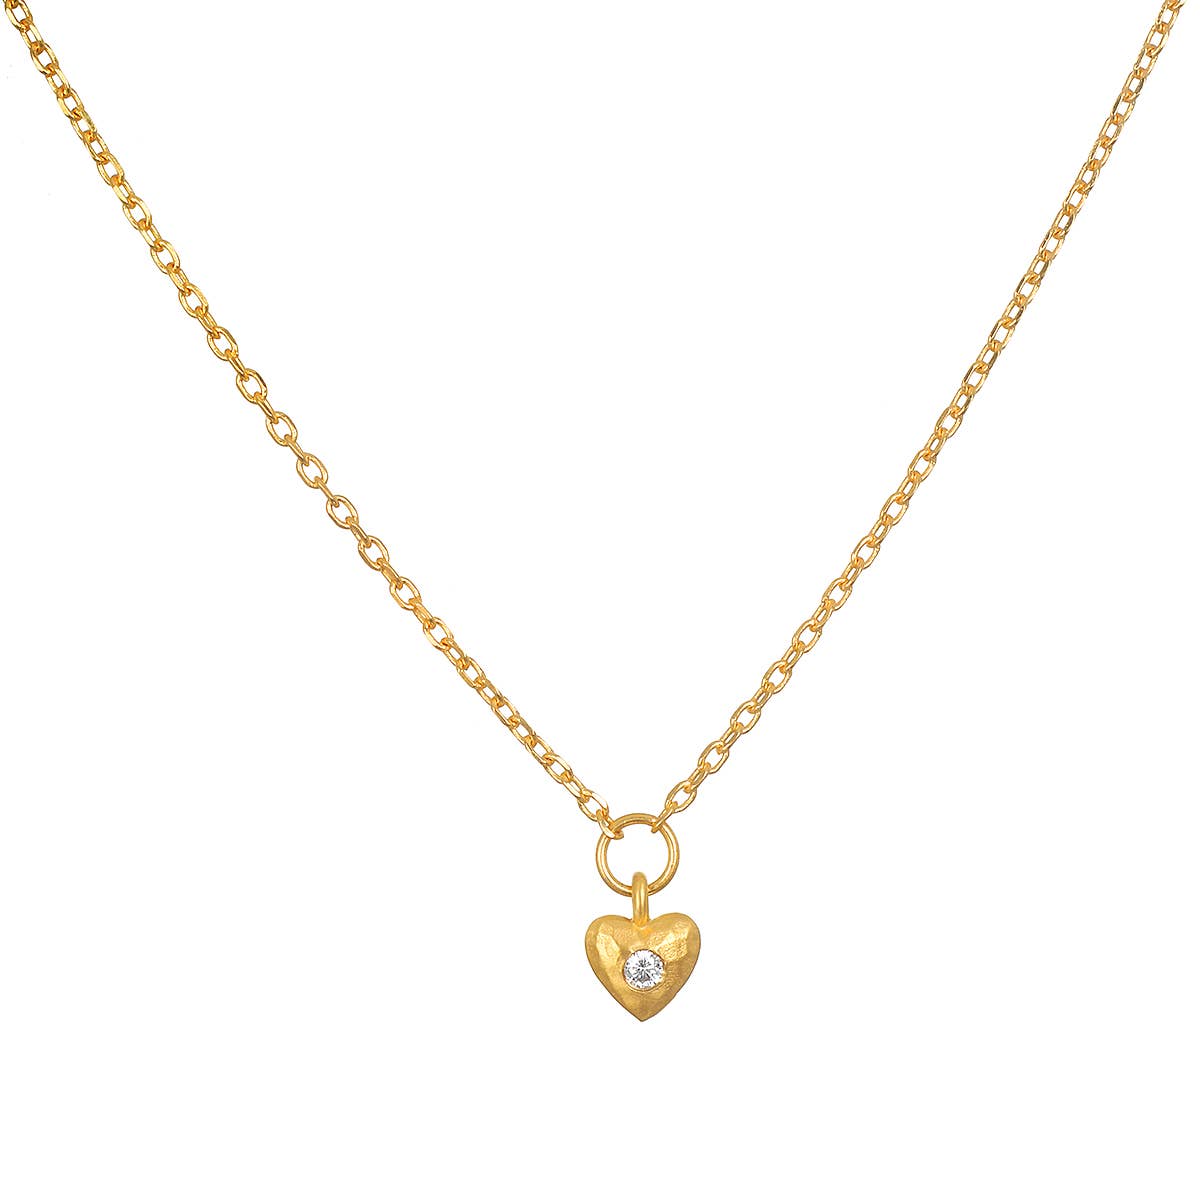 16" White Topaz Mini Heart Pendant Necklace, "Inner Light" Necklace - Abigail Fox Designs